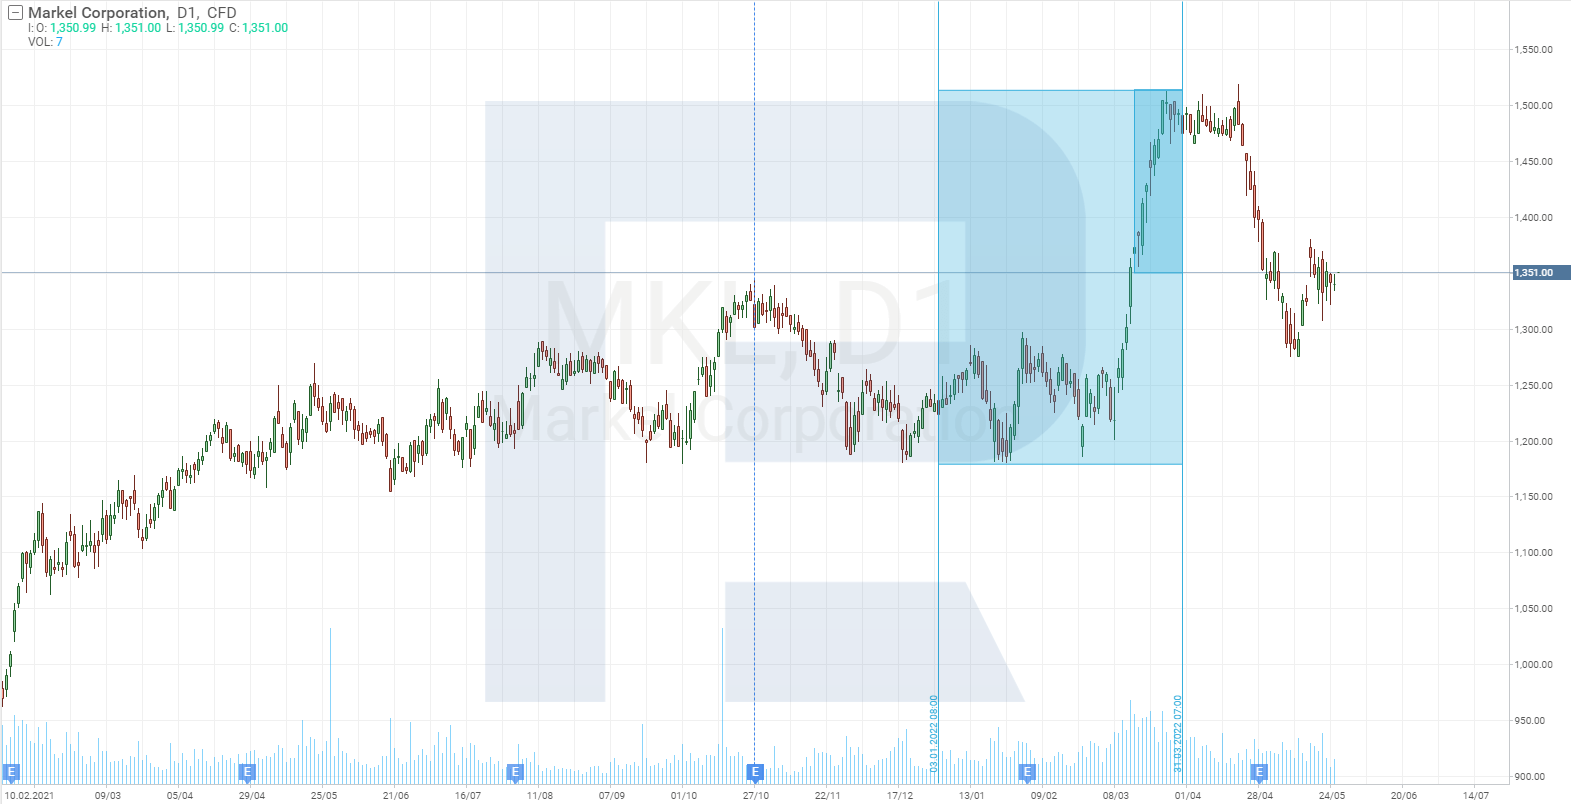 Markel Corporation share price chart